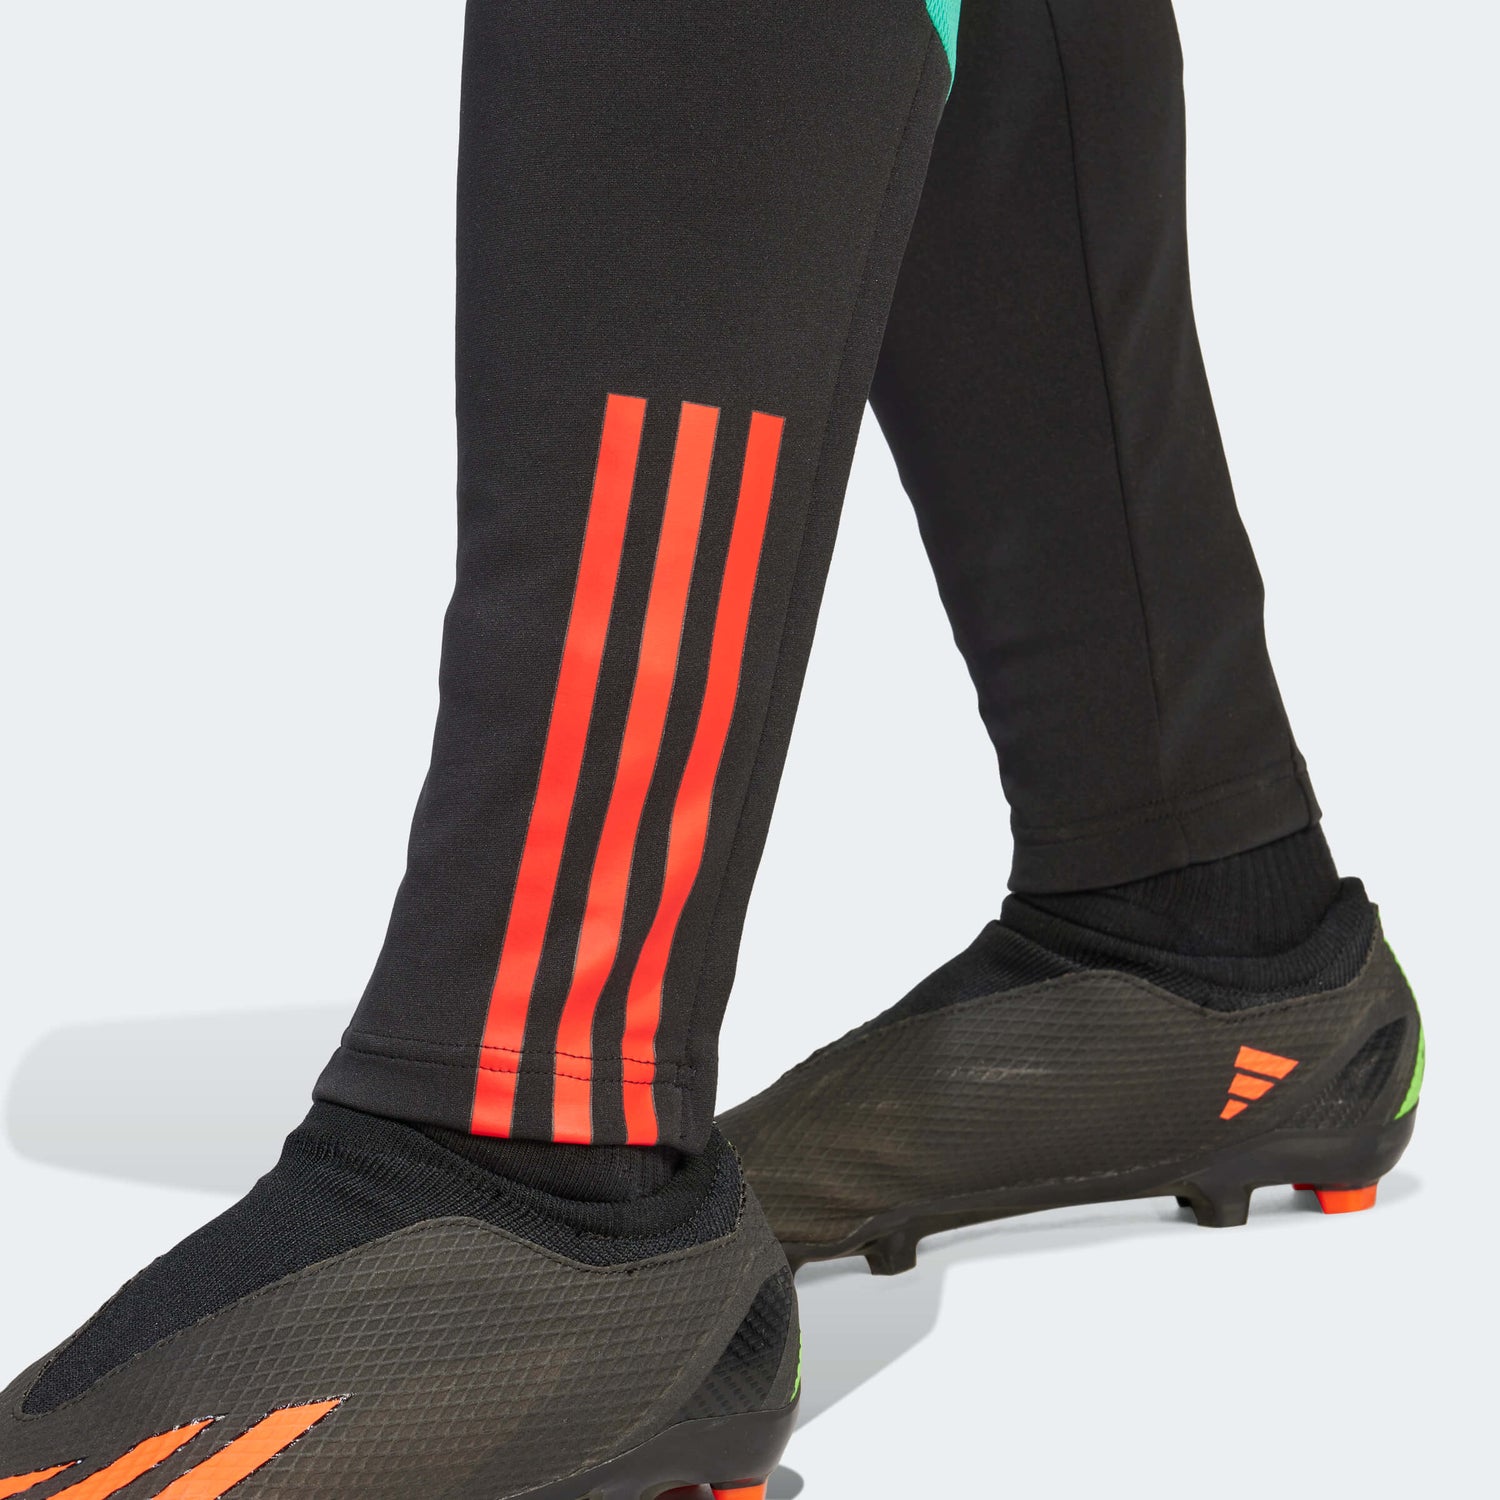 New Adidas Women's TIRO Soccer Track Pants, Black “end Plastic Waste” $75 XL